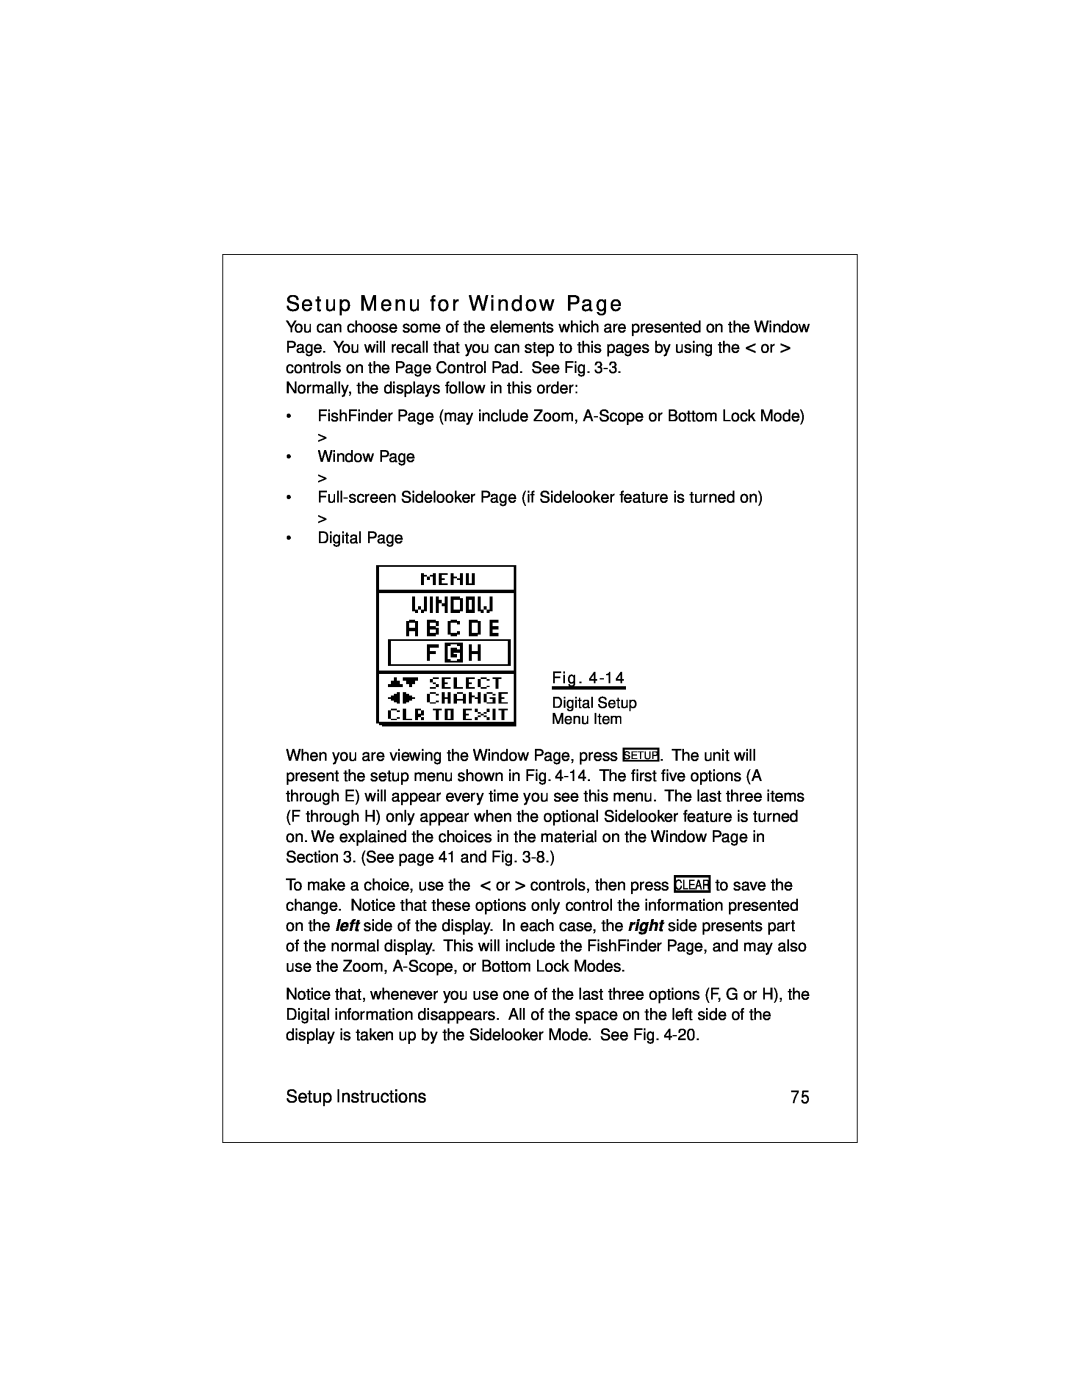 Raymarine L470 instruction manual Setup Menu for Window Page, Setup Instructions 